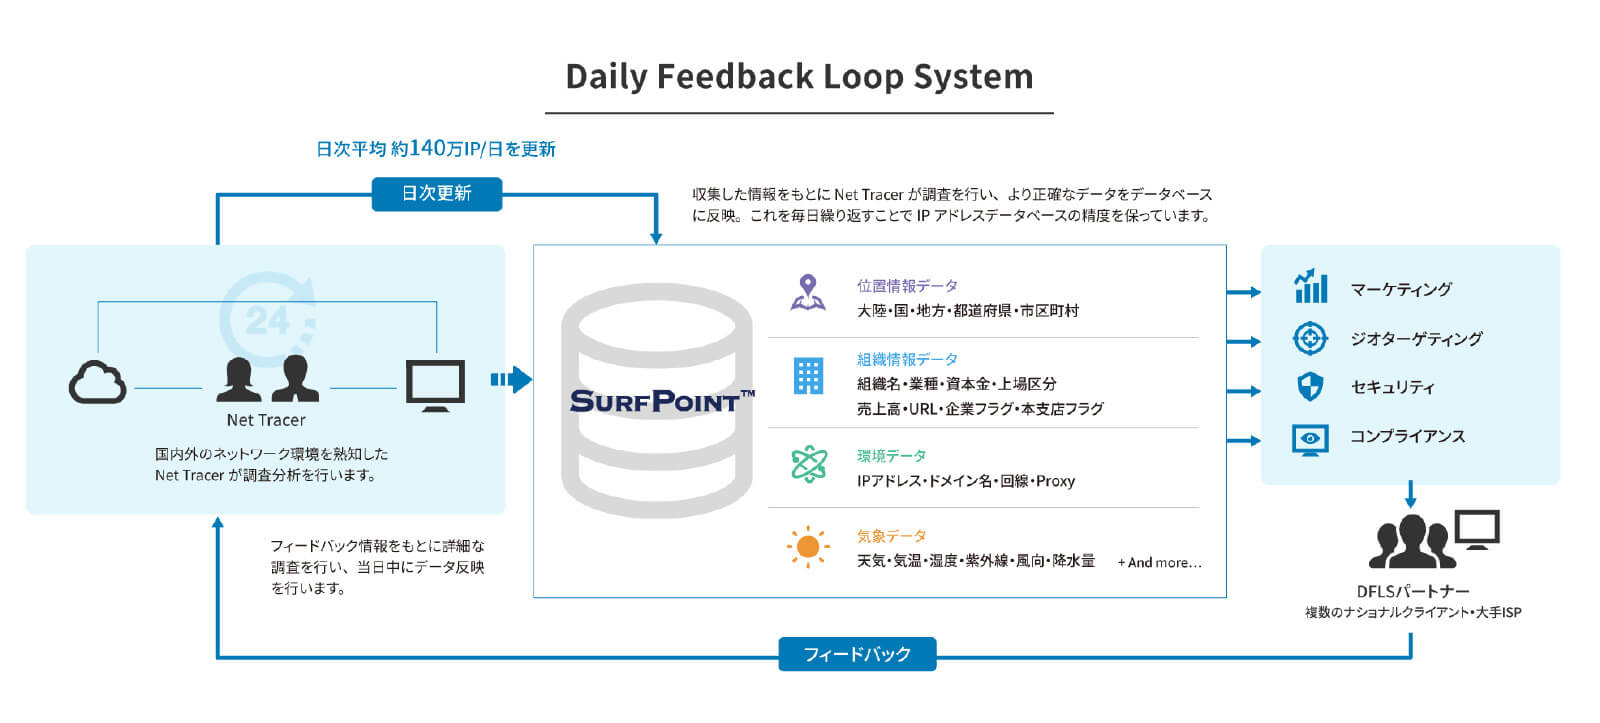 Daily Feedback Loop System